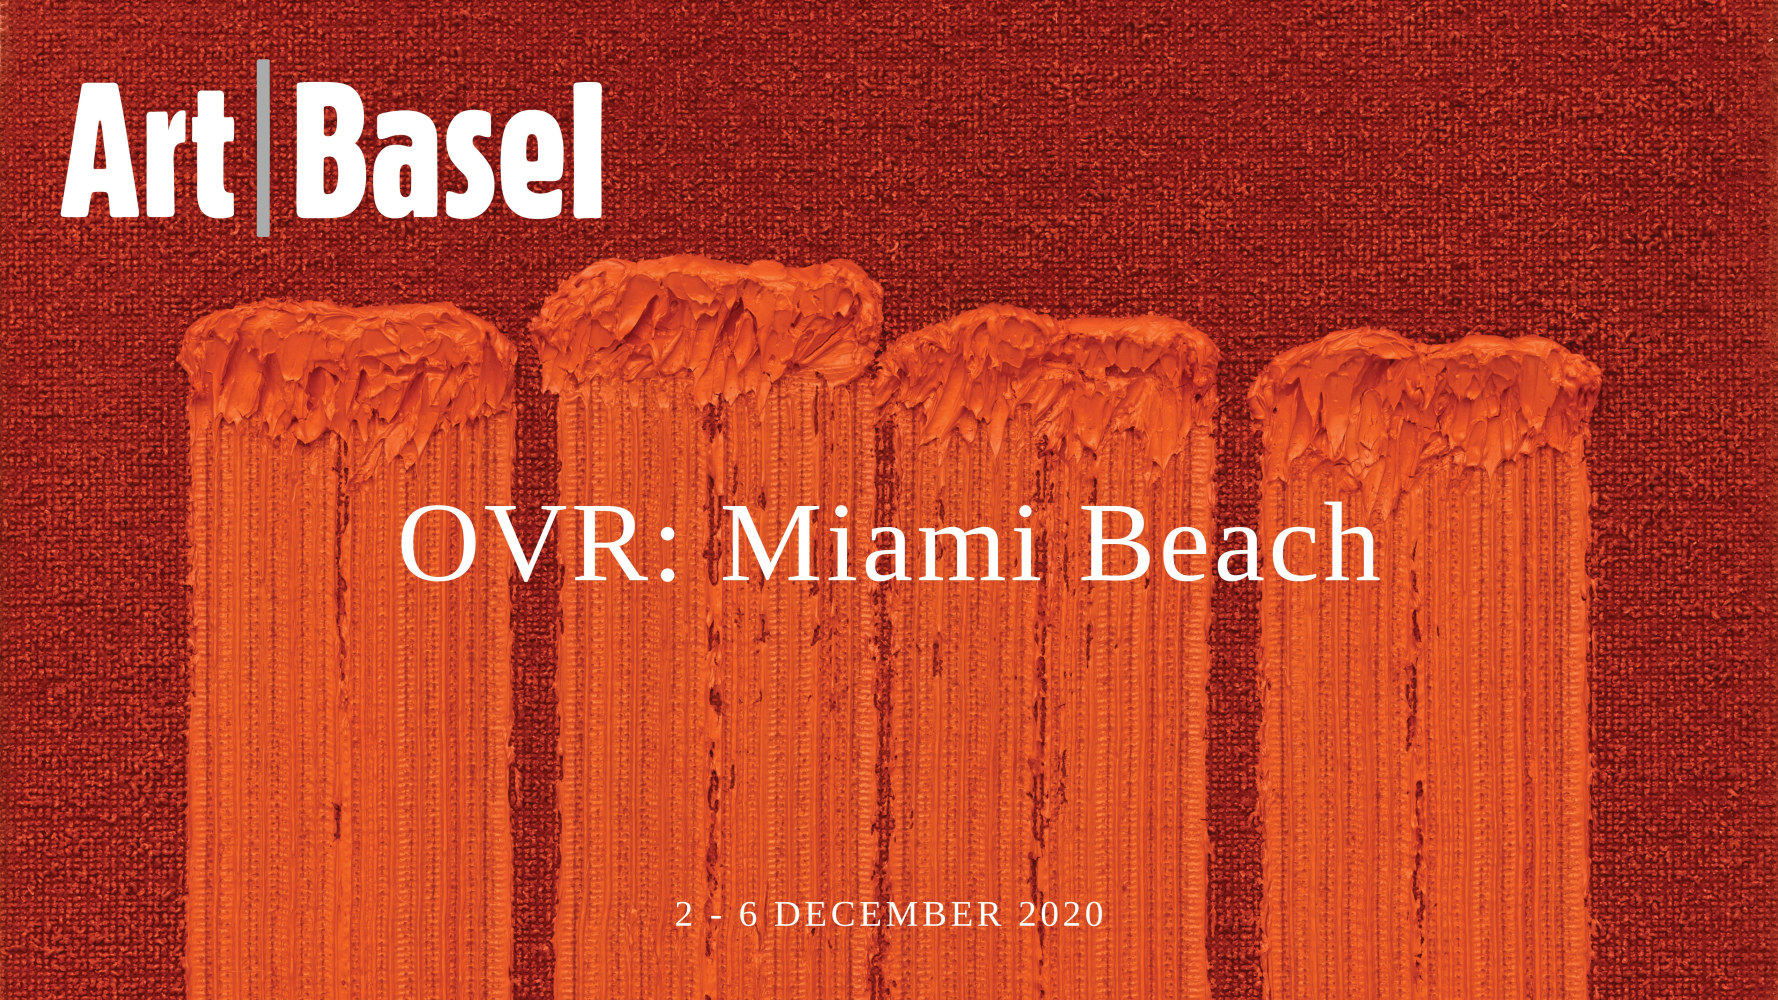 Art Basel OVR: Miami Beach